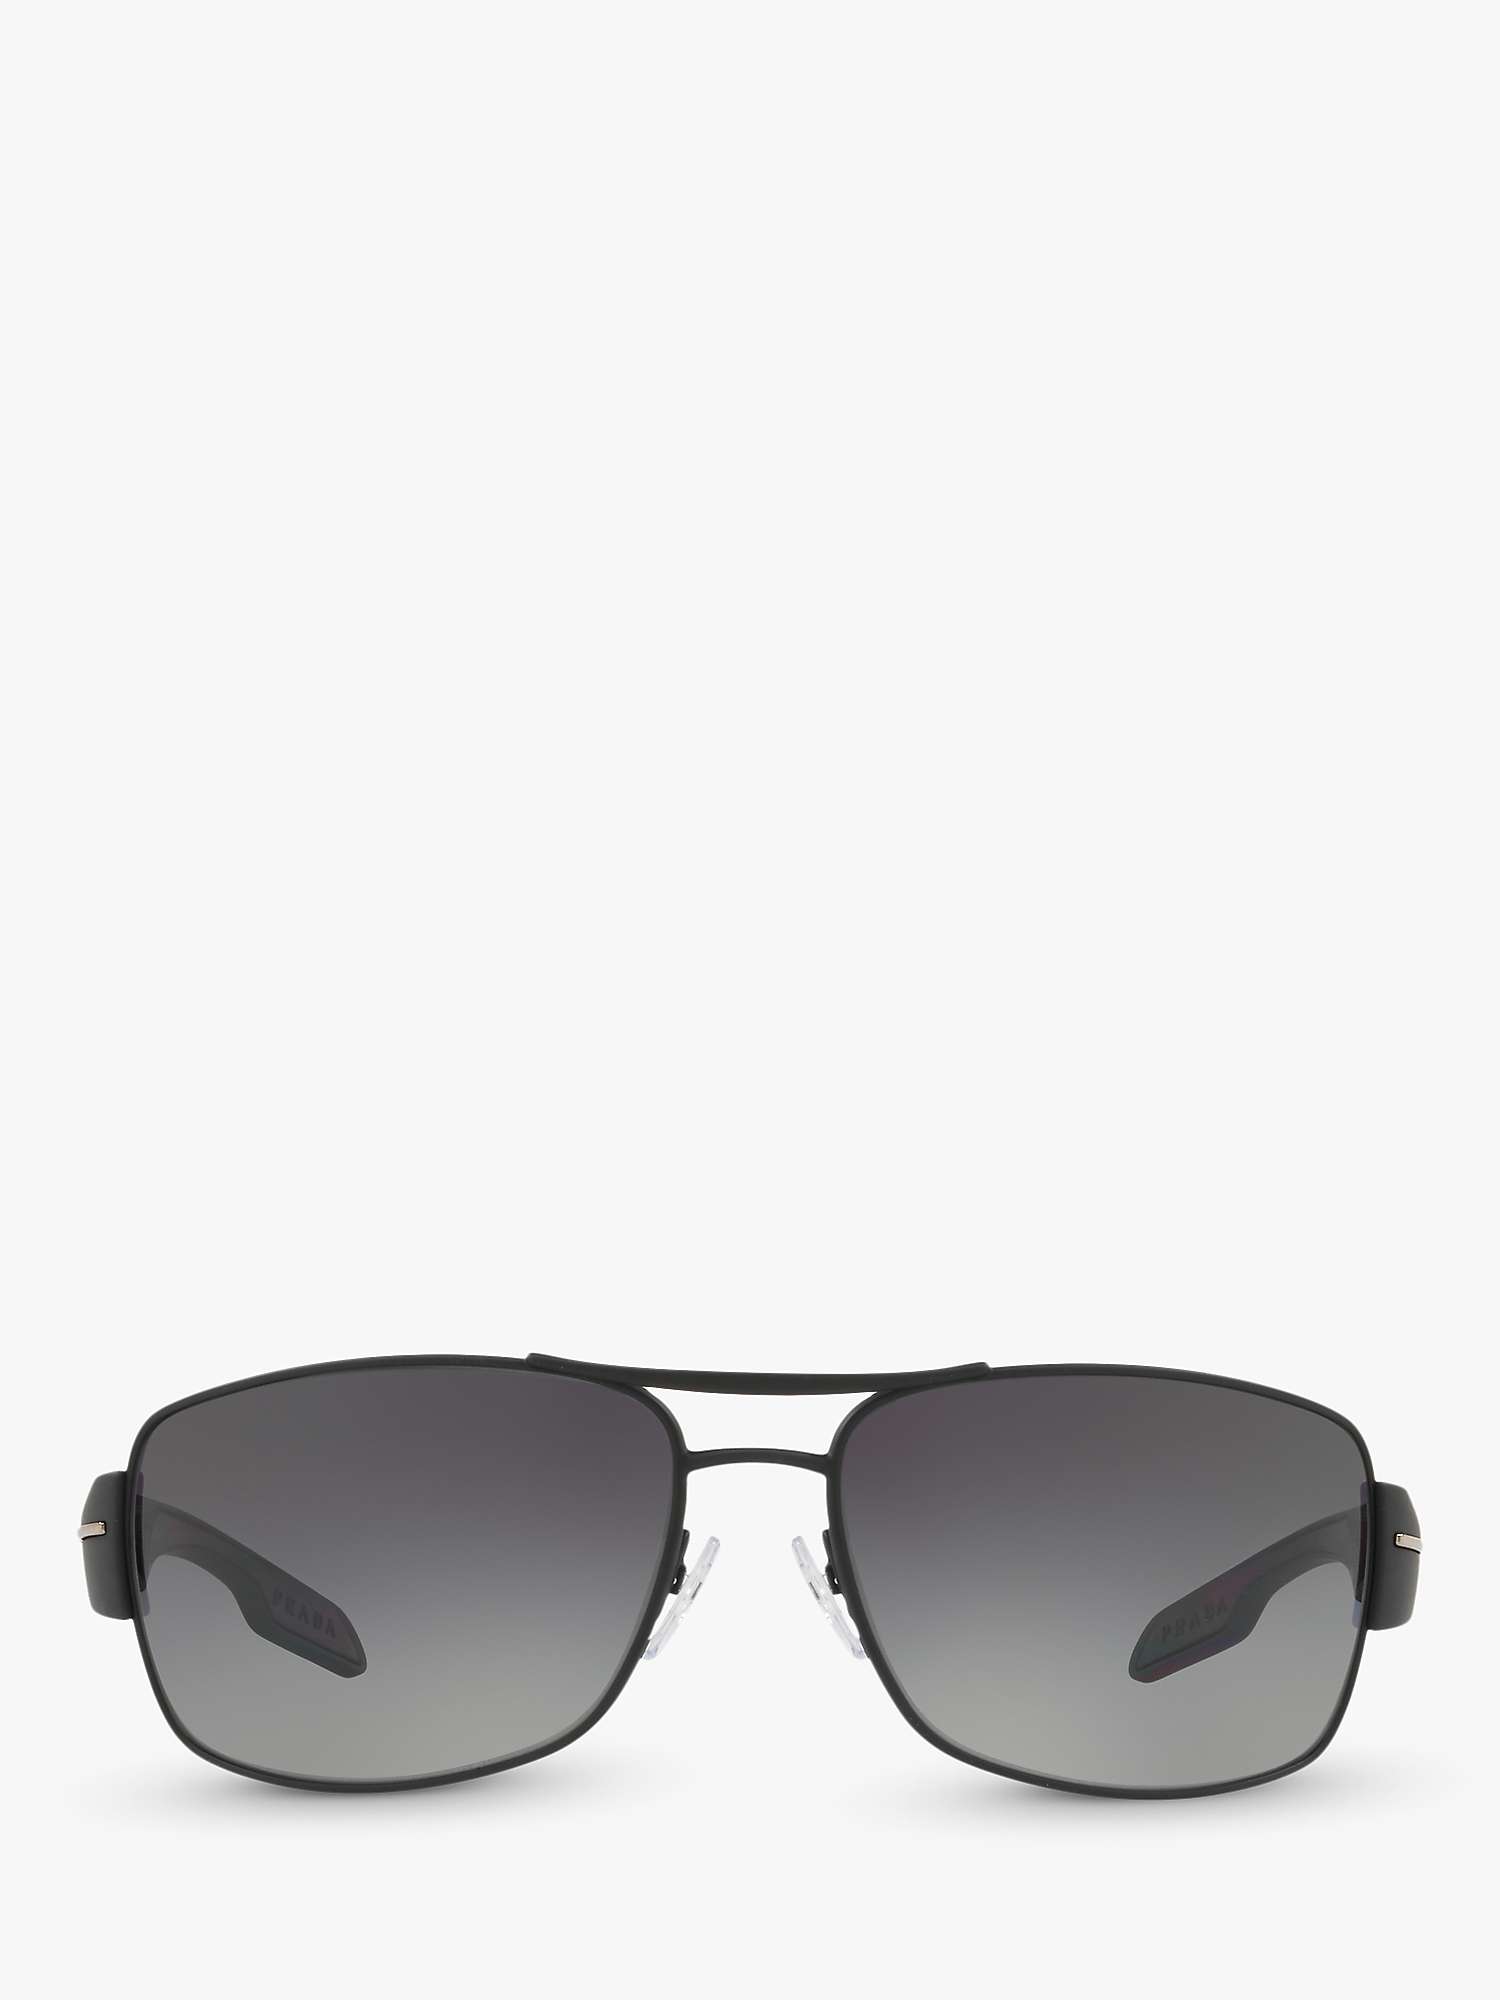 Prada PS 53NS Men's Rectangular Sunglasses, Black Rubber at John Lewis ...